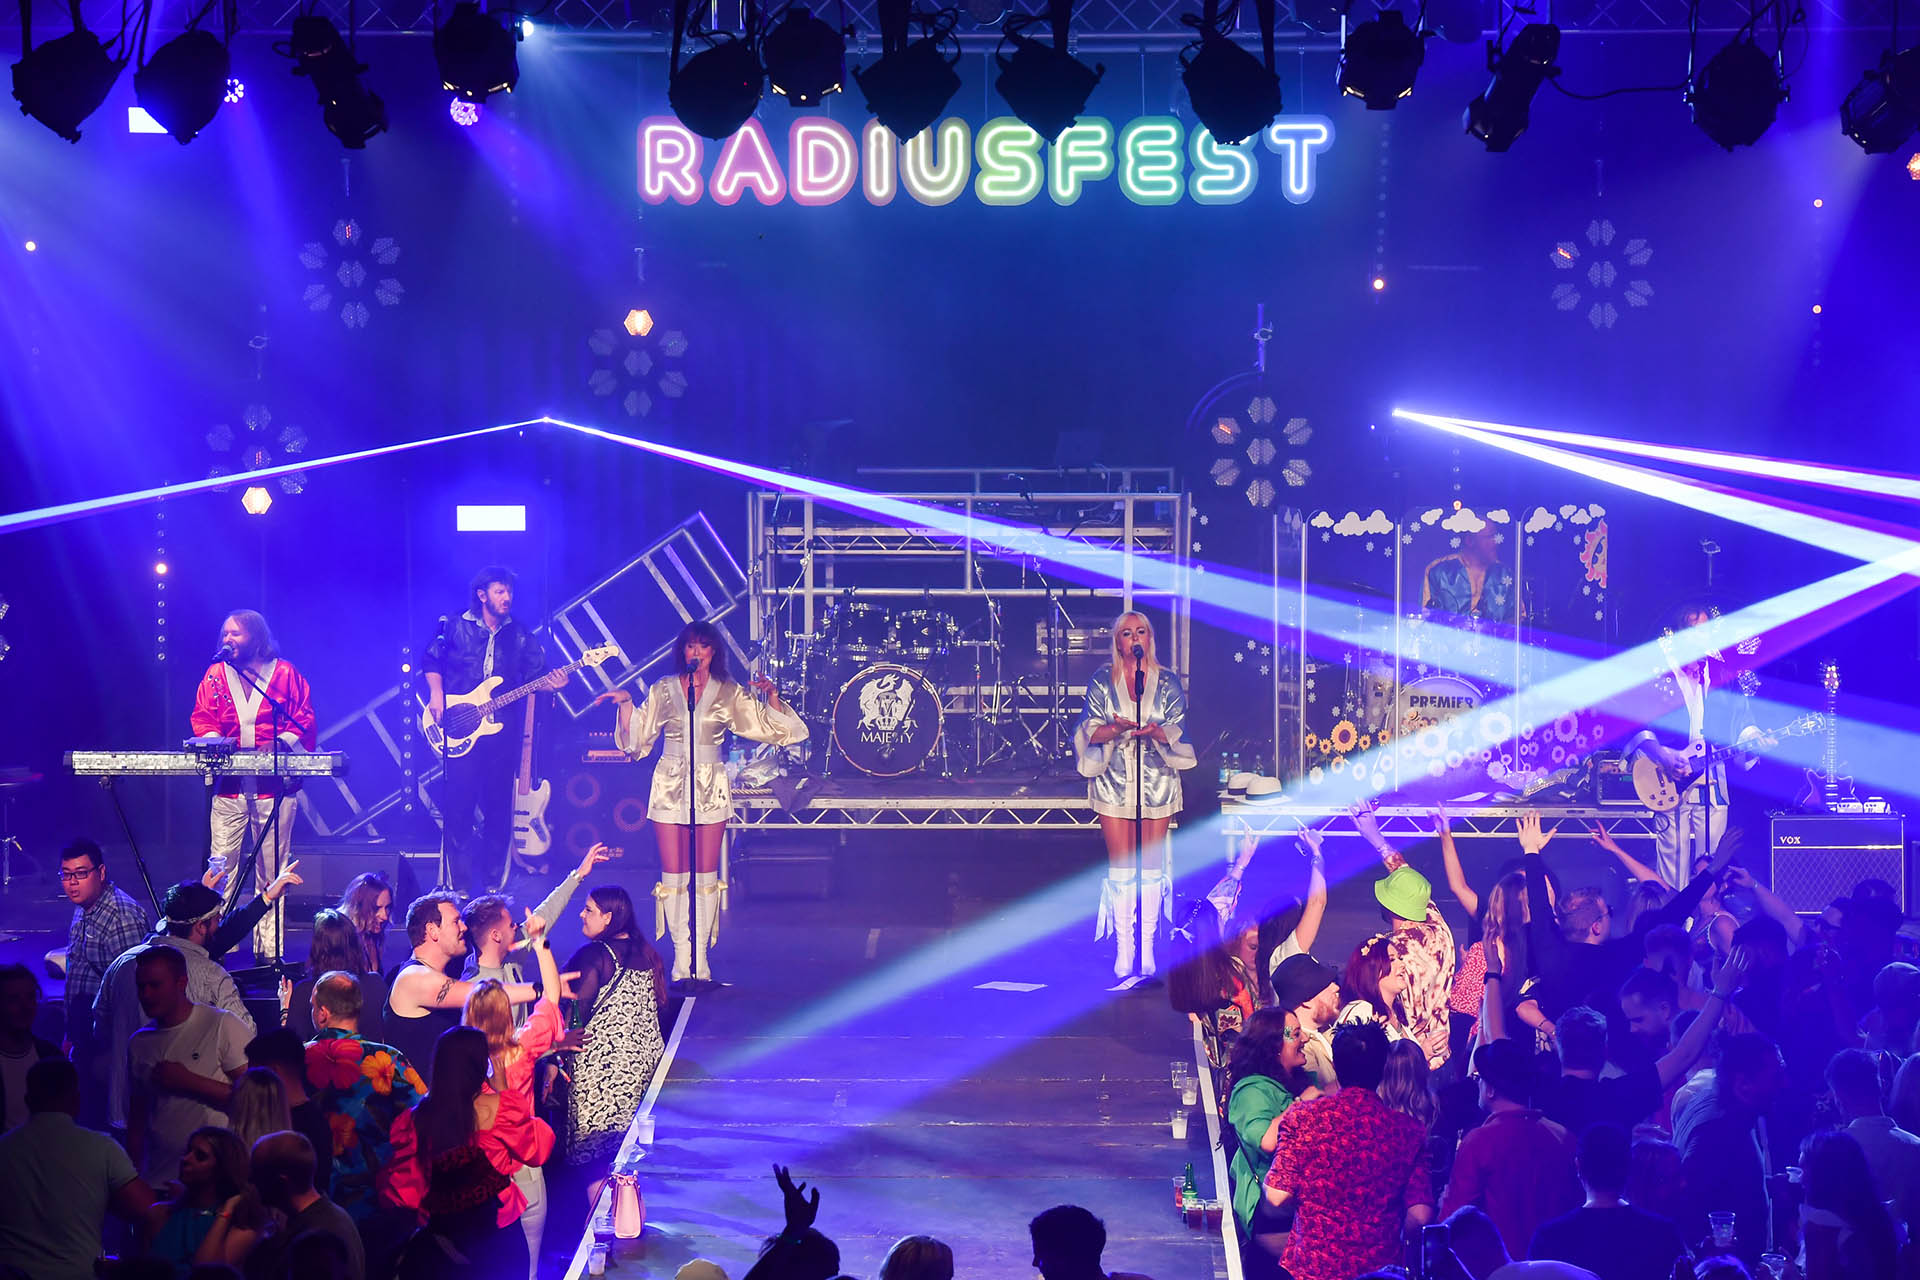 Radiusfest The sense of summer fun infusing this ‘Glastonbury’ inspired corporate party